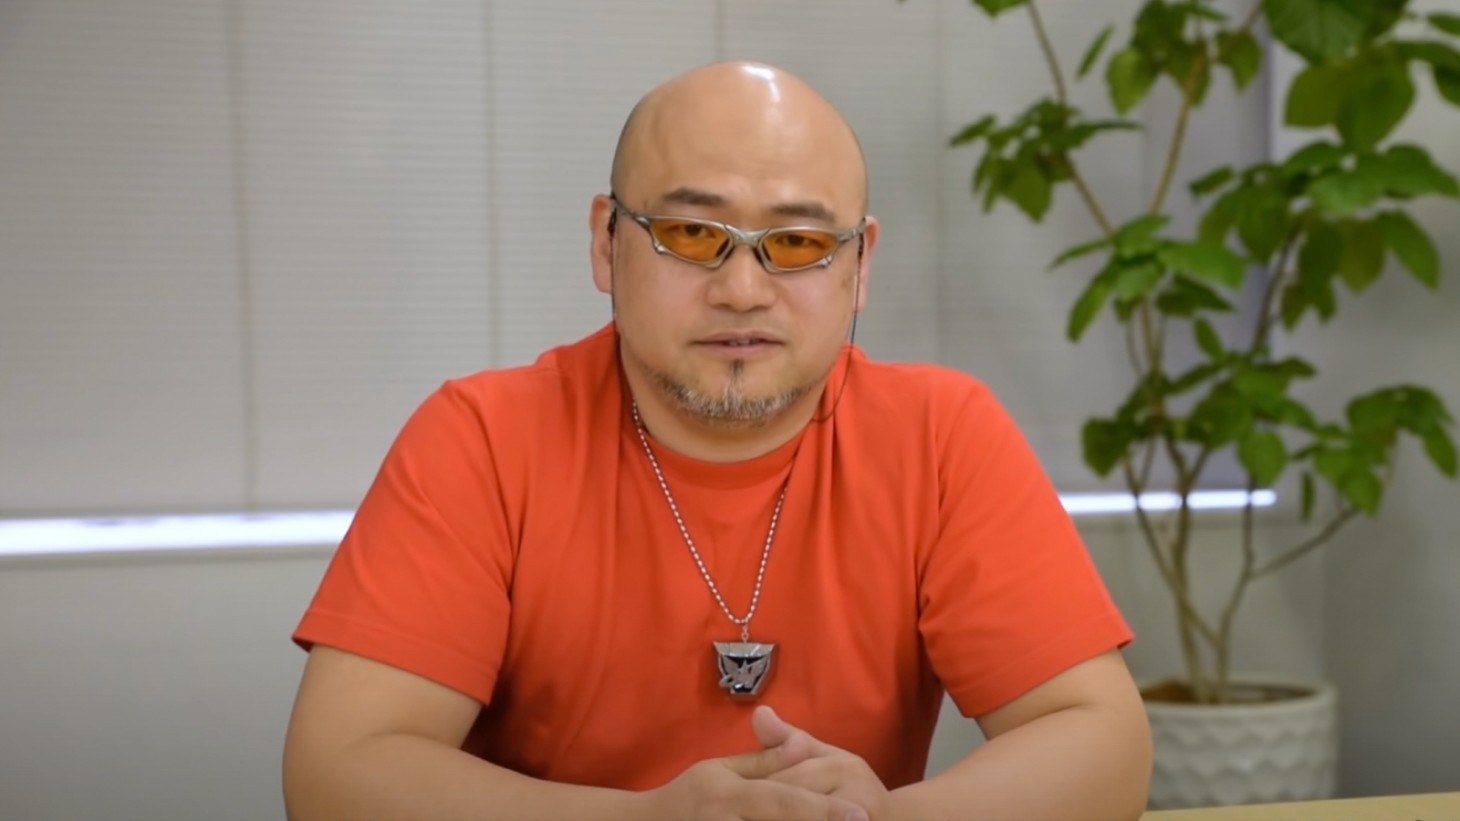 Bayonetta 3 is still being developed, says Hideki Kamiya